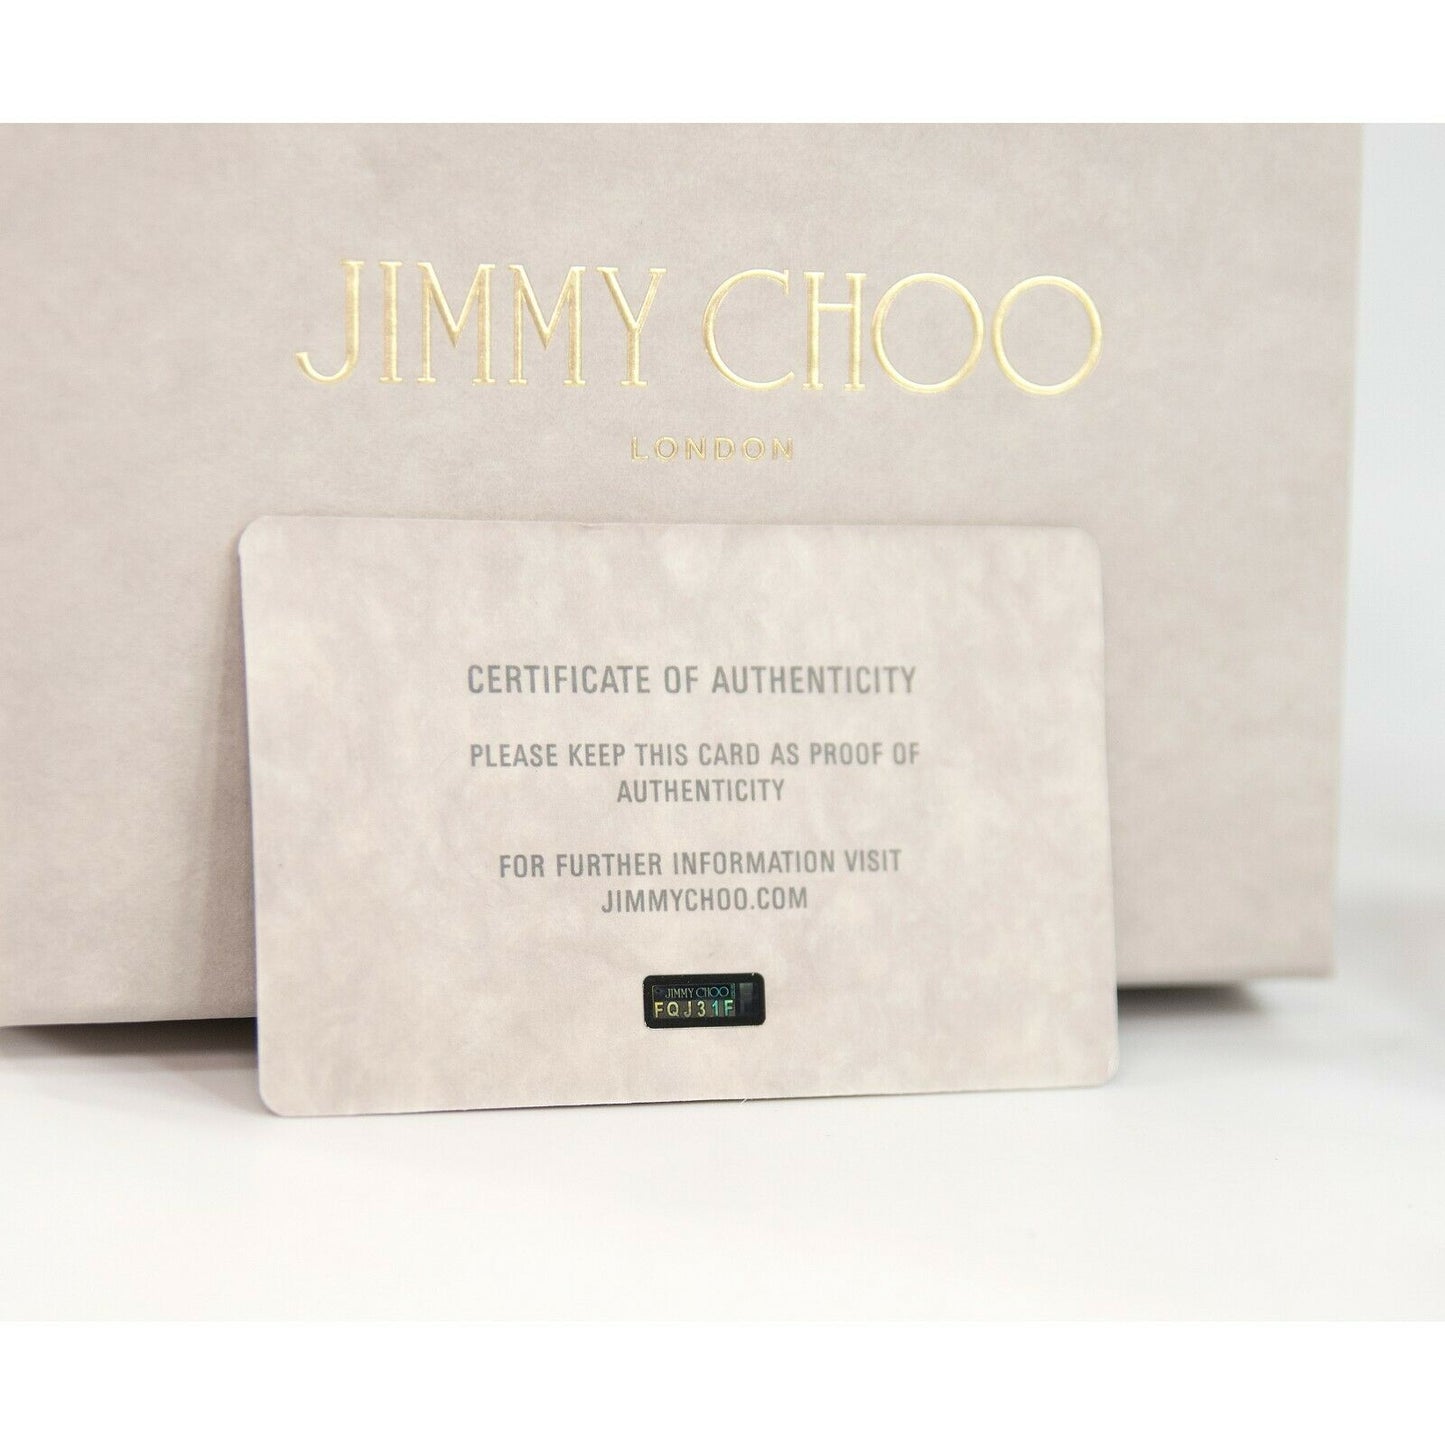 Jimmy Choo Aarna Silver Leather Card Case Holder Wallet NWT